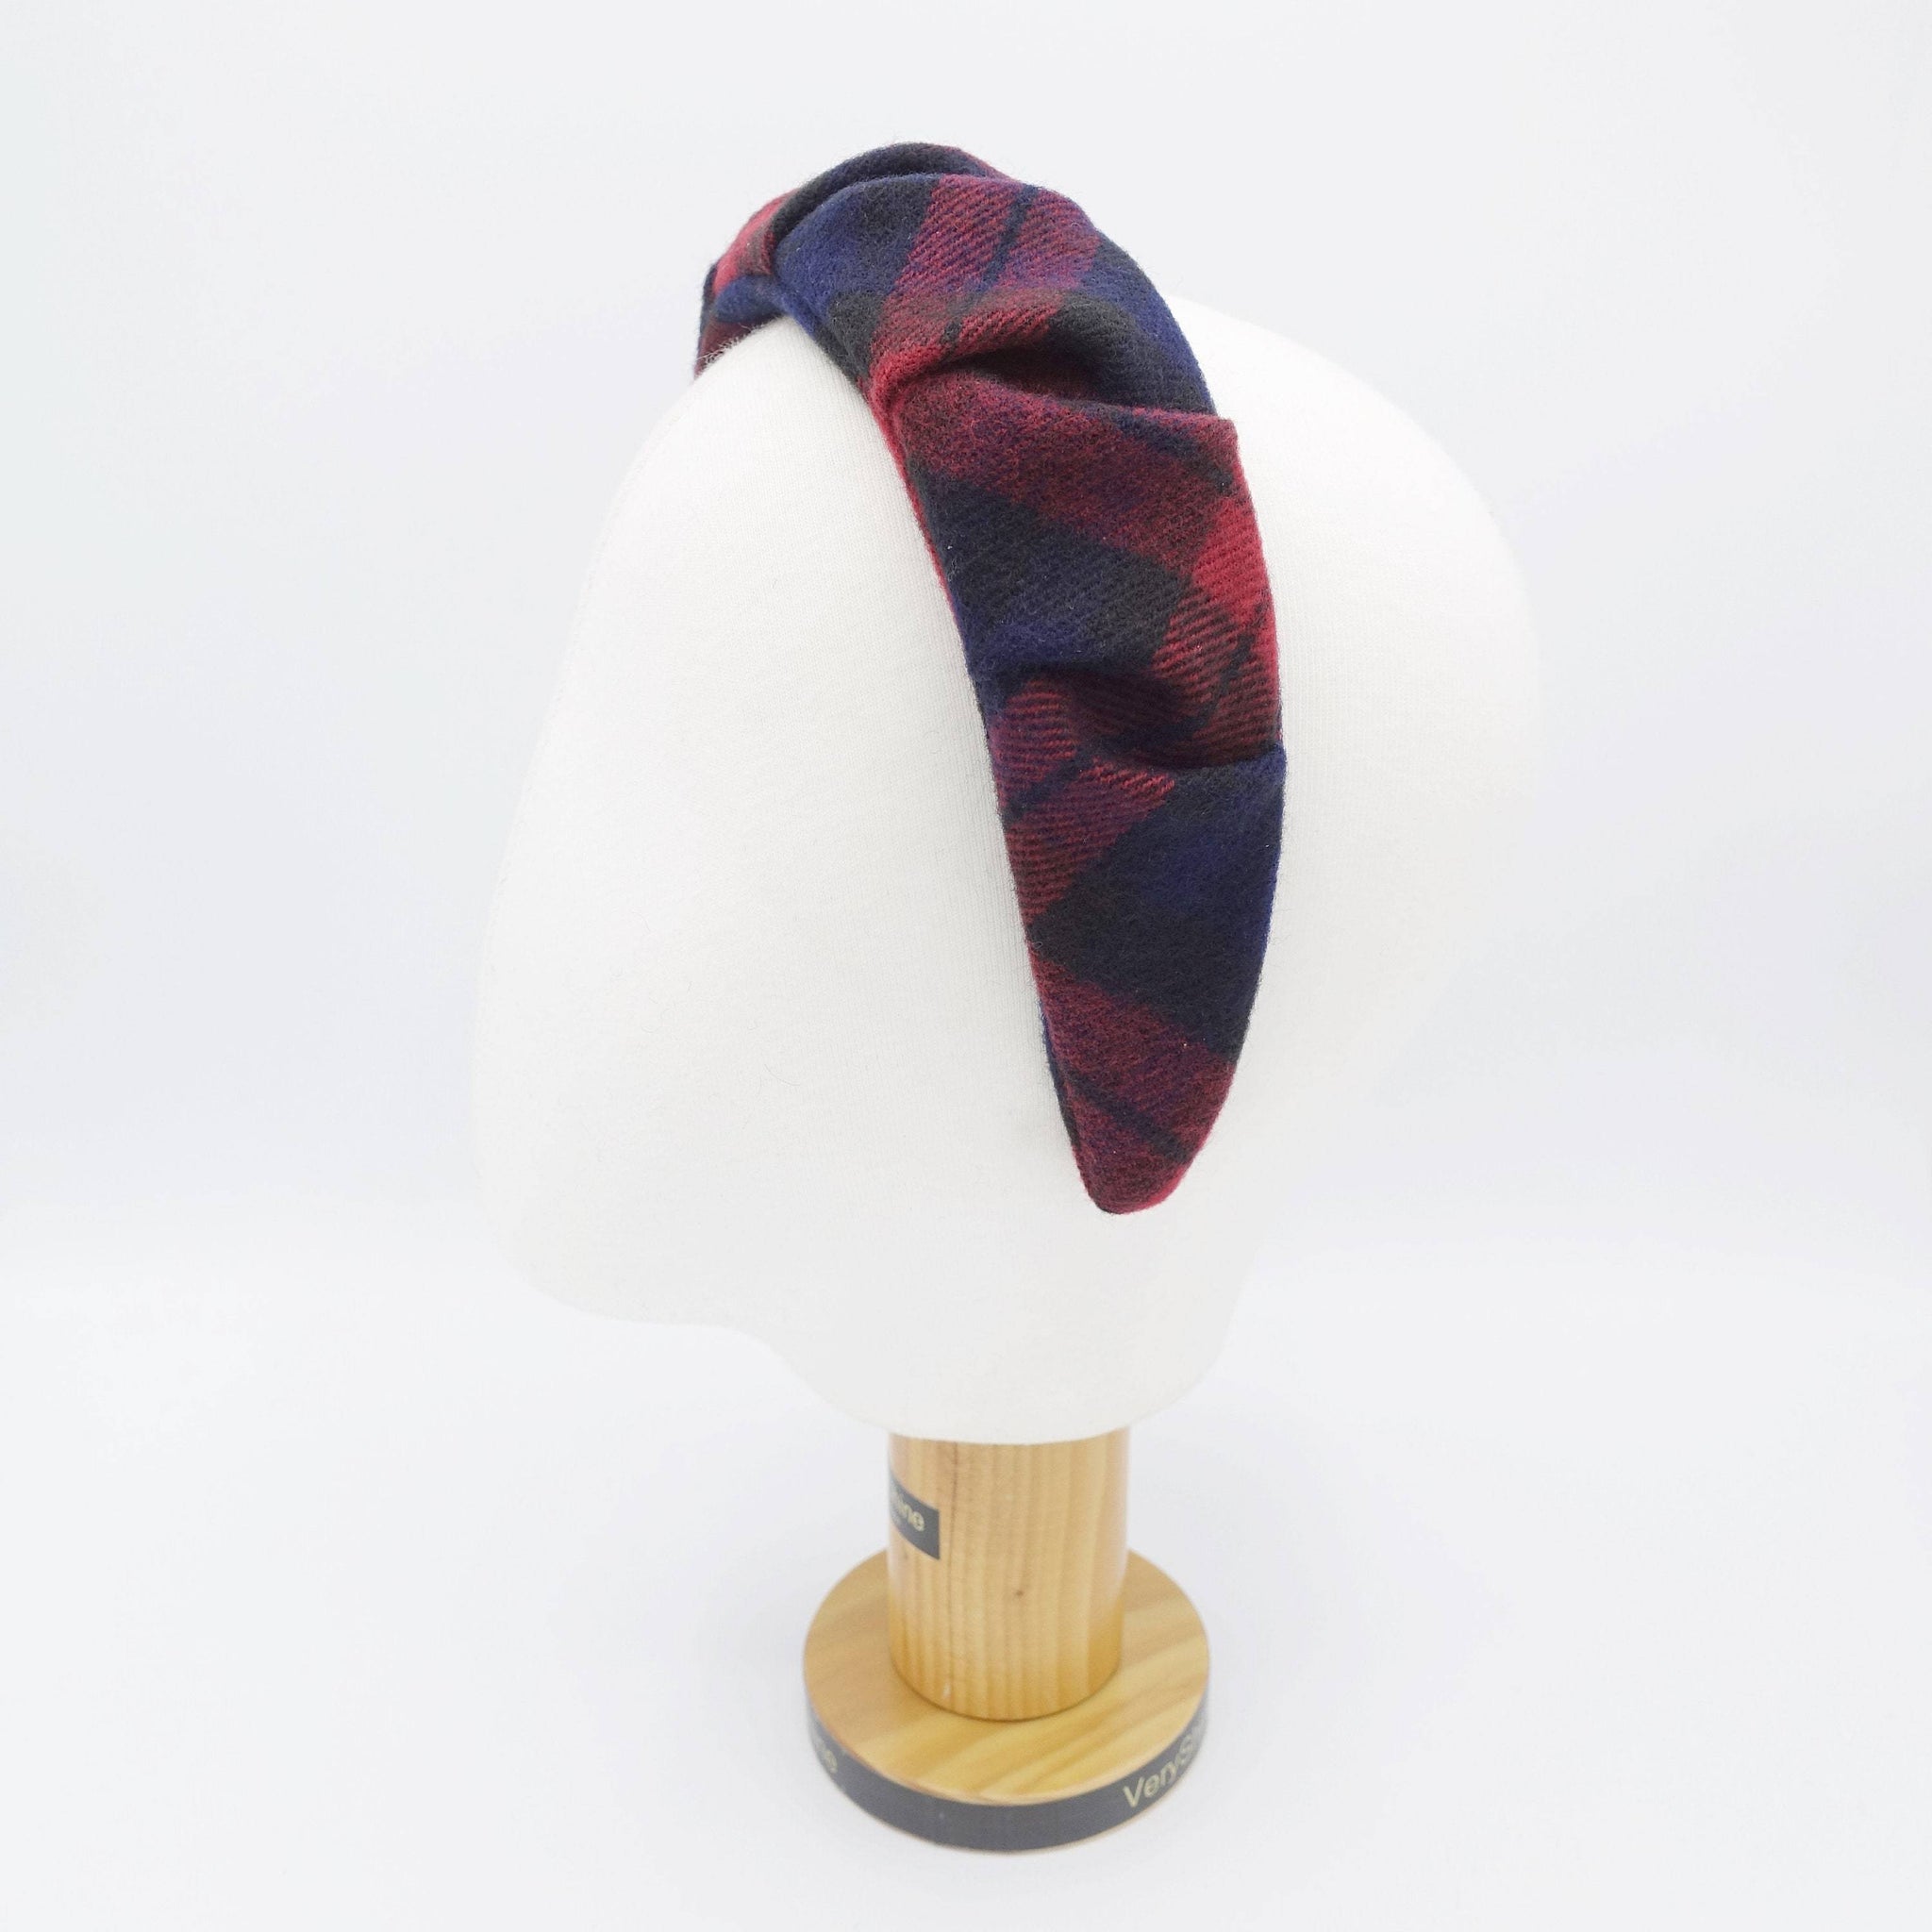 VeryShine tartan headband plaid check woolen Fall Winter hair accessory for women